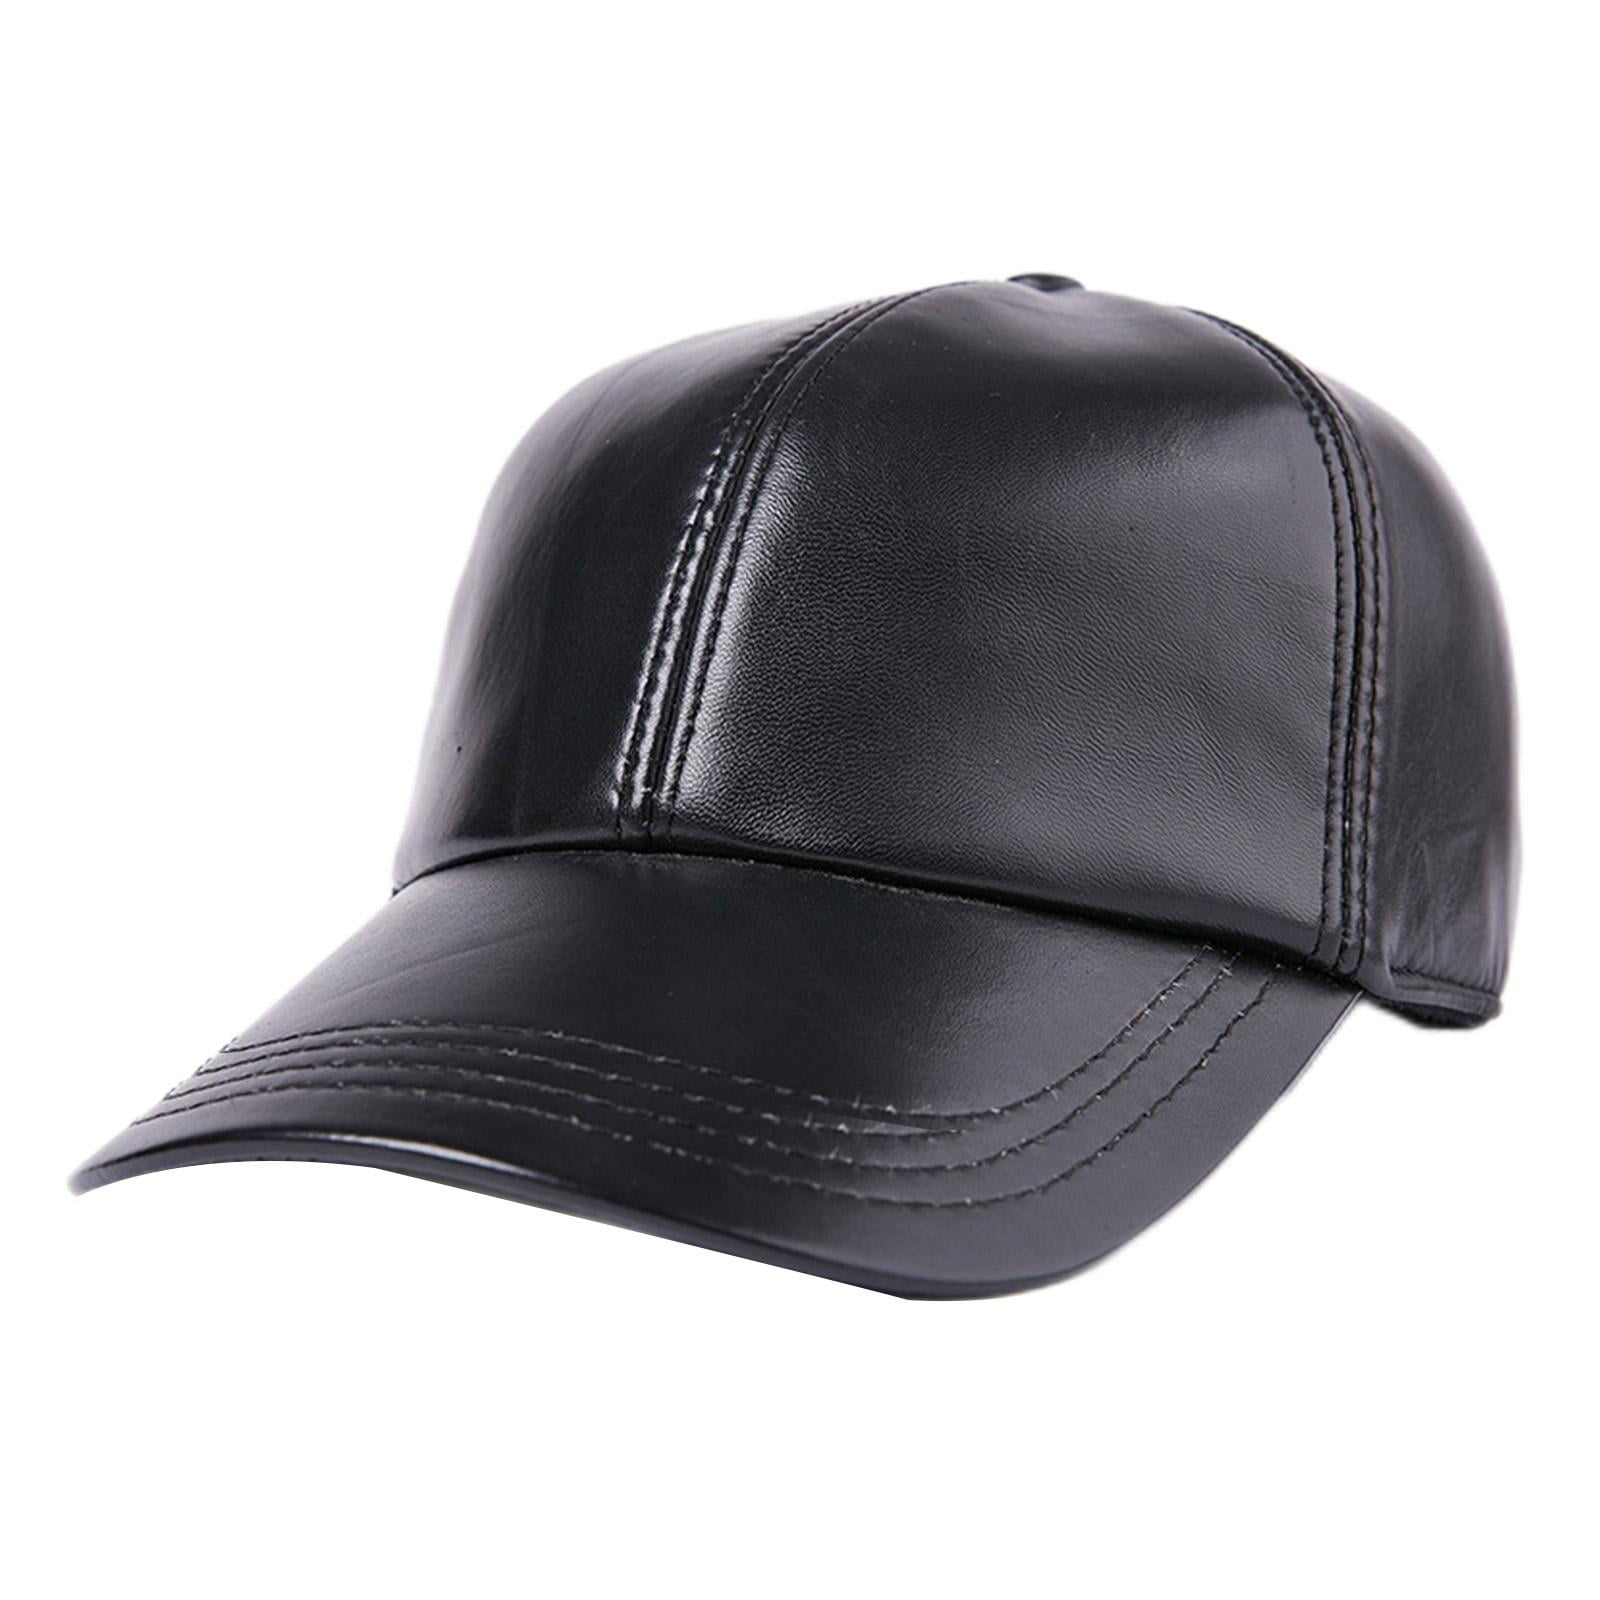 Baseball Cap with inscription “LV”, Black 